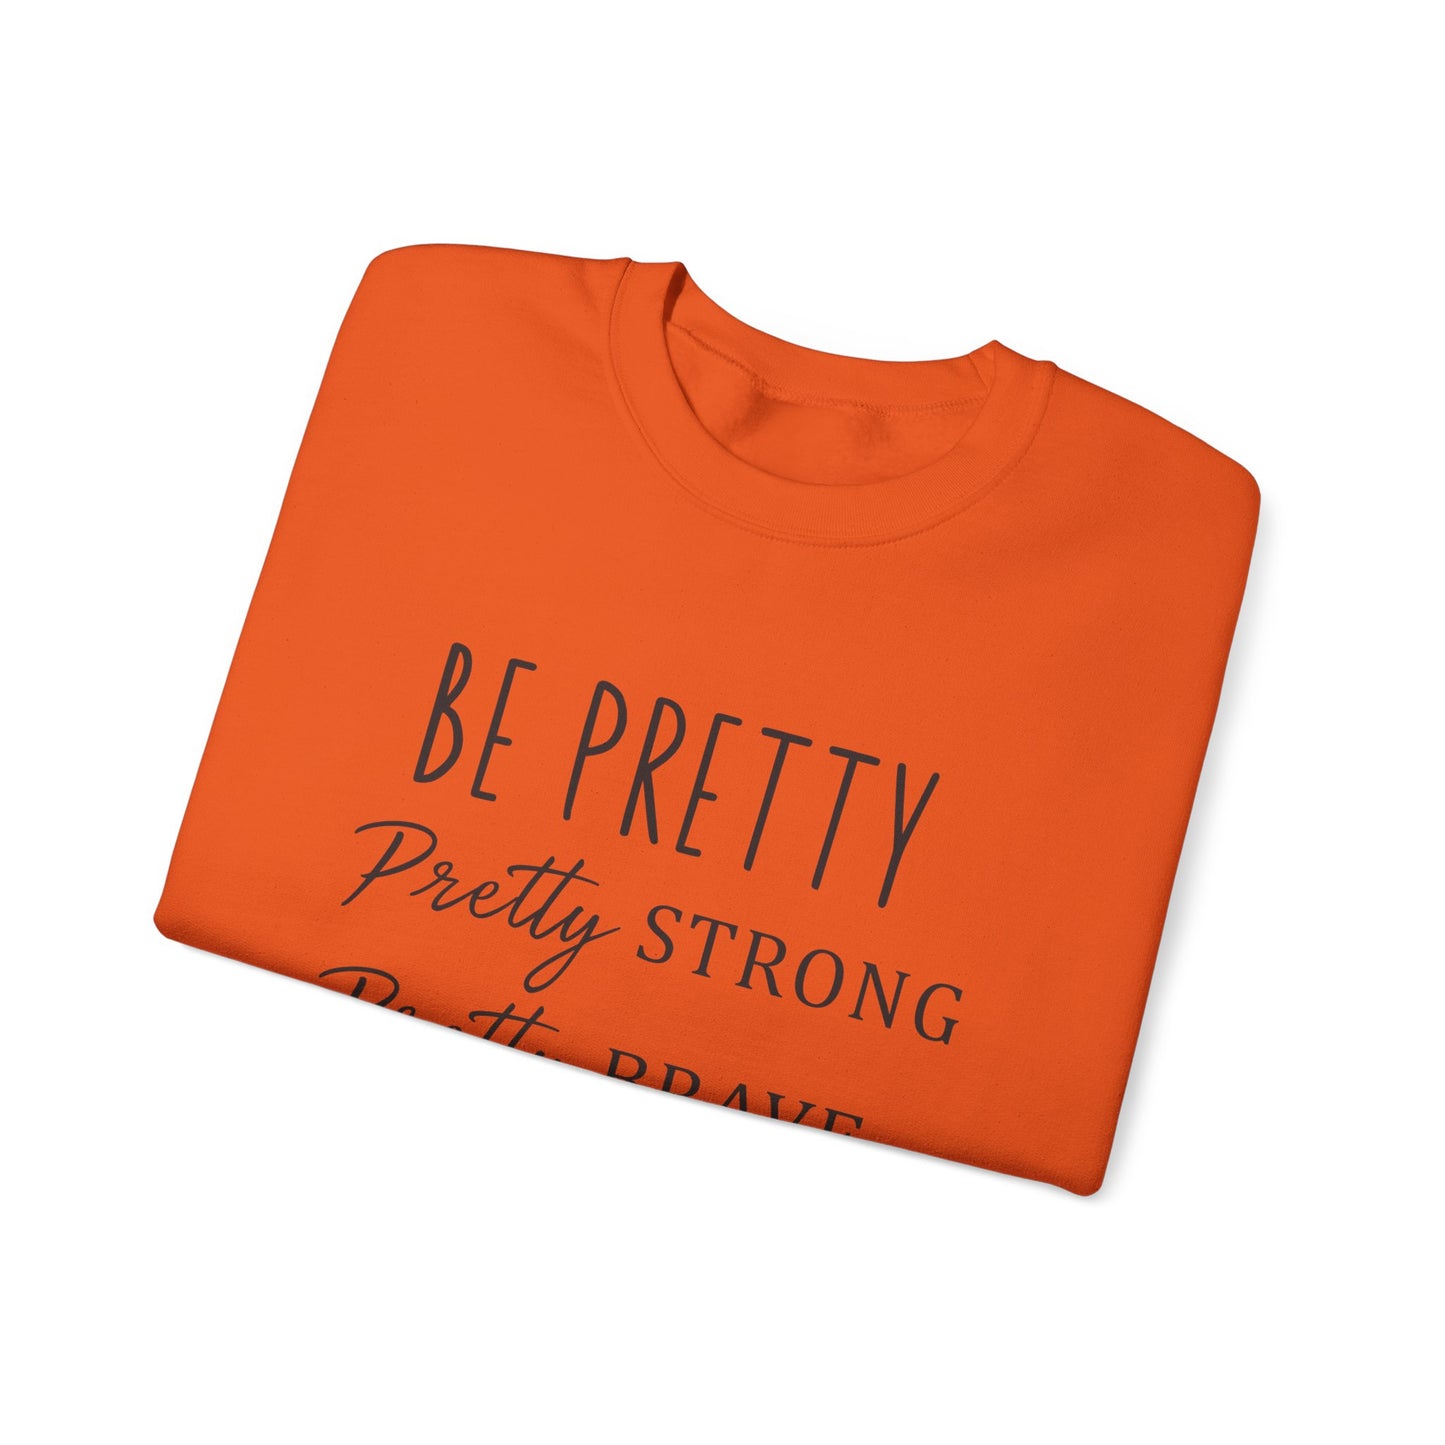 Be Pretty Strong Brave Kind Women's Sweatshirt